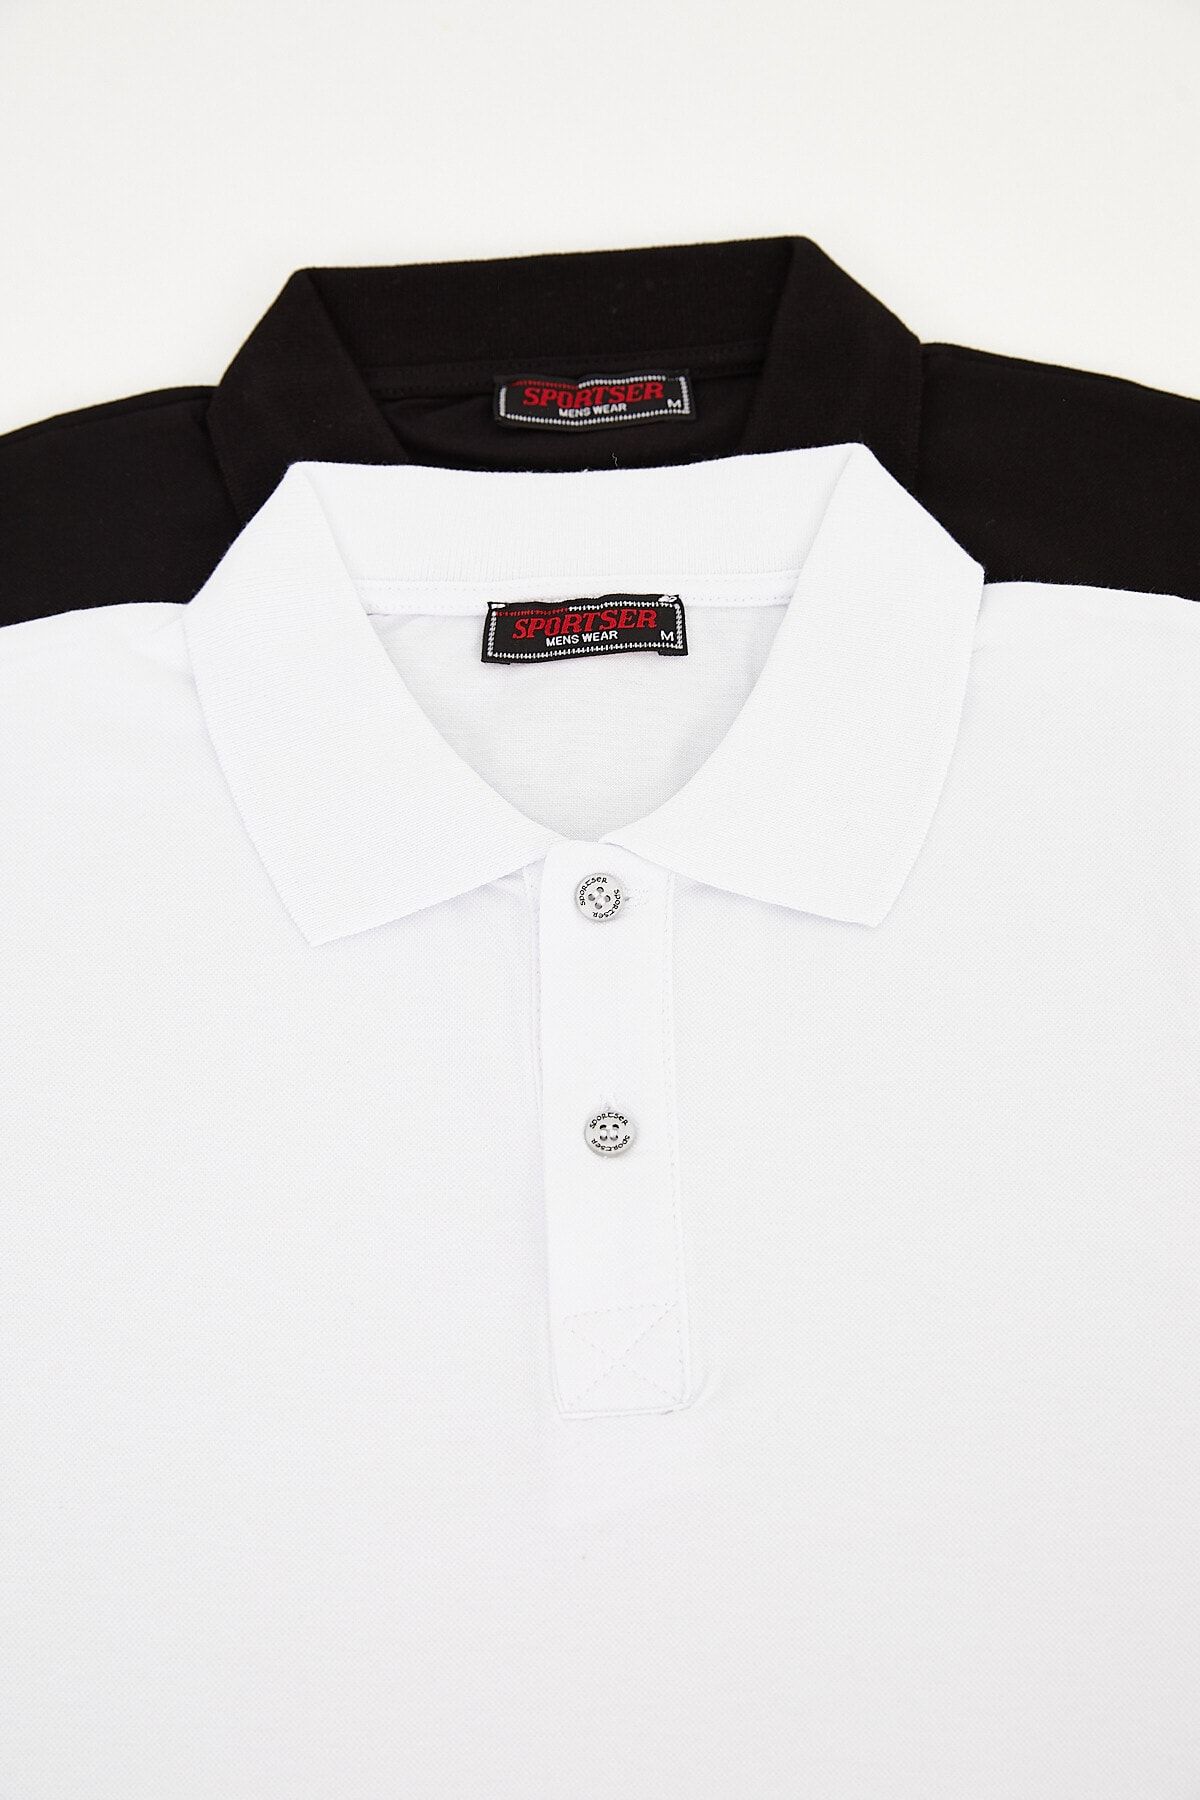 DOAYS Erkek 2'li Polo Yaka %100 Pamuk T-shirt Siyah-beyaz Dawrazz-023